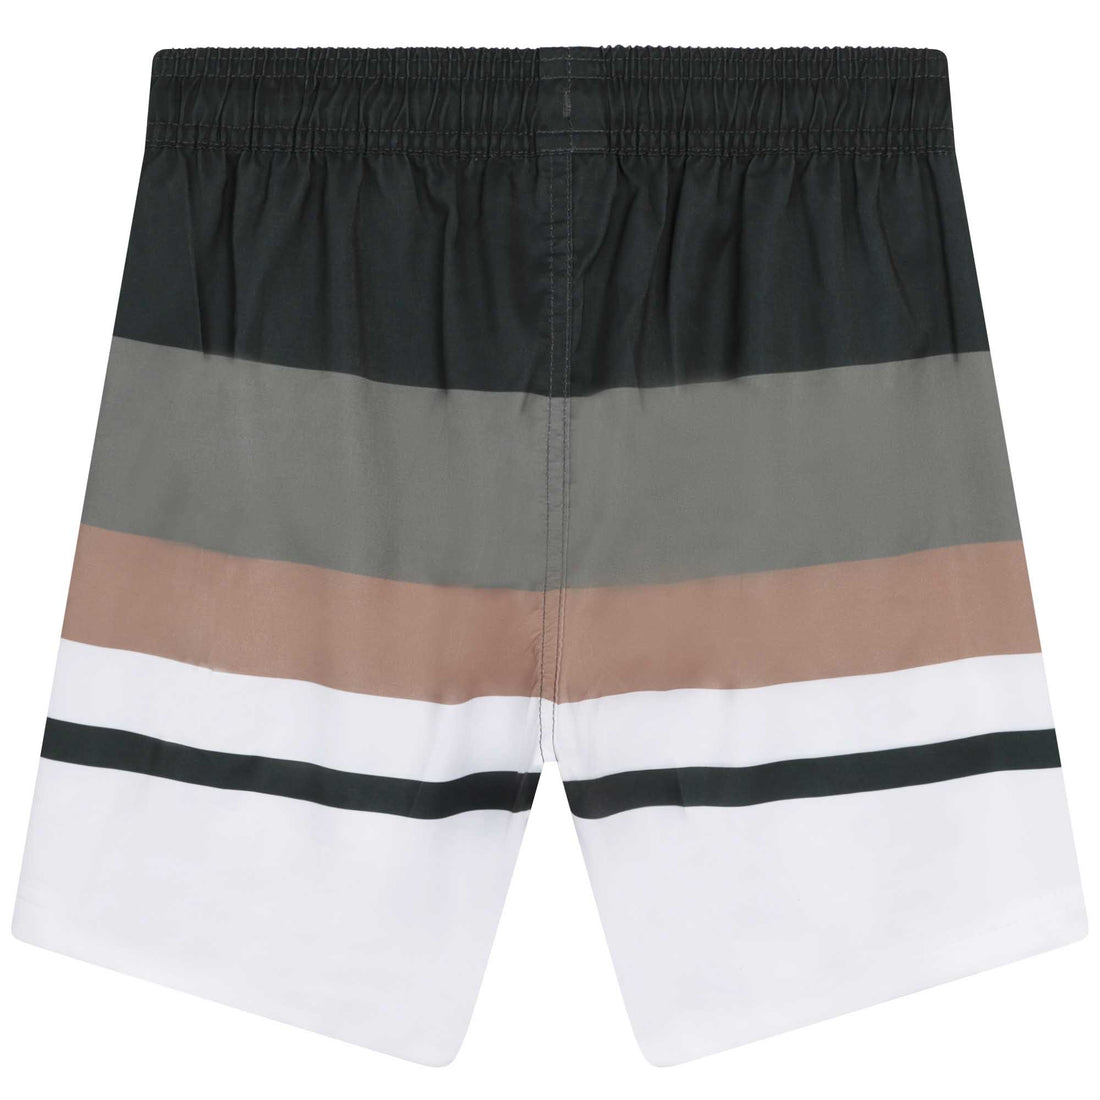 Hugo Boss Swim Shorts Style: J24849